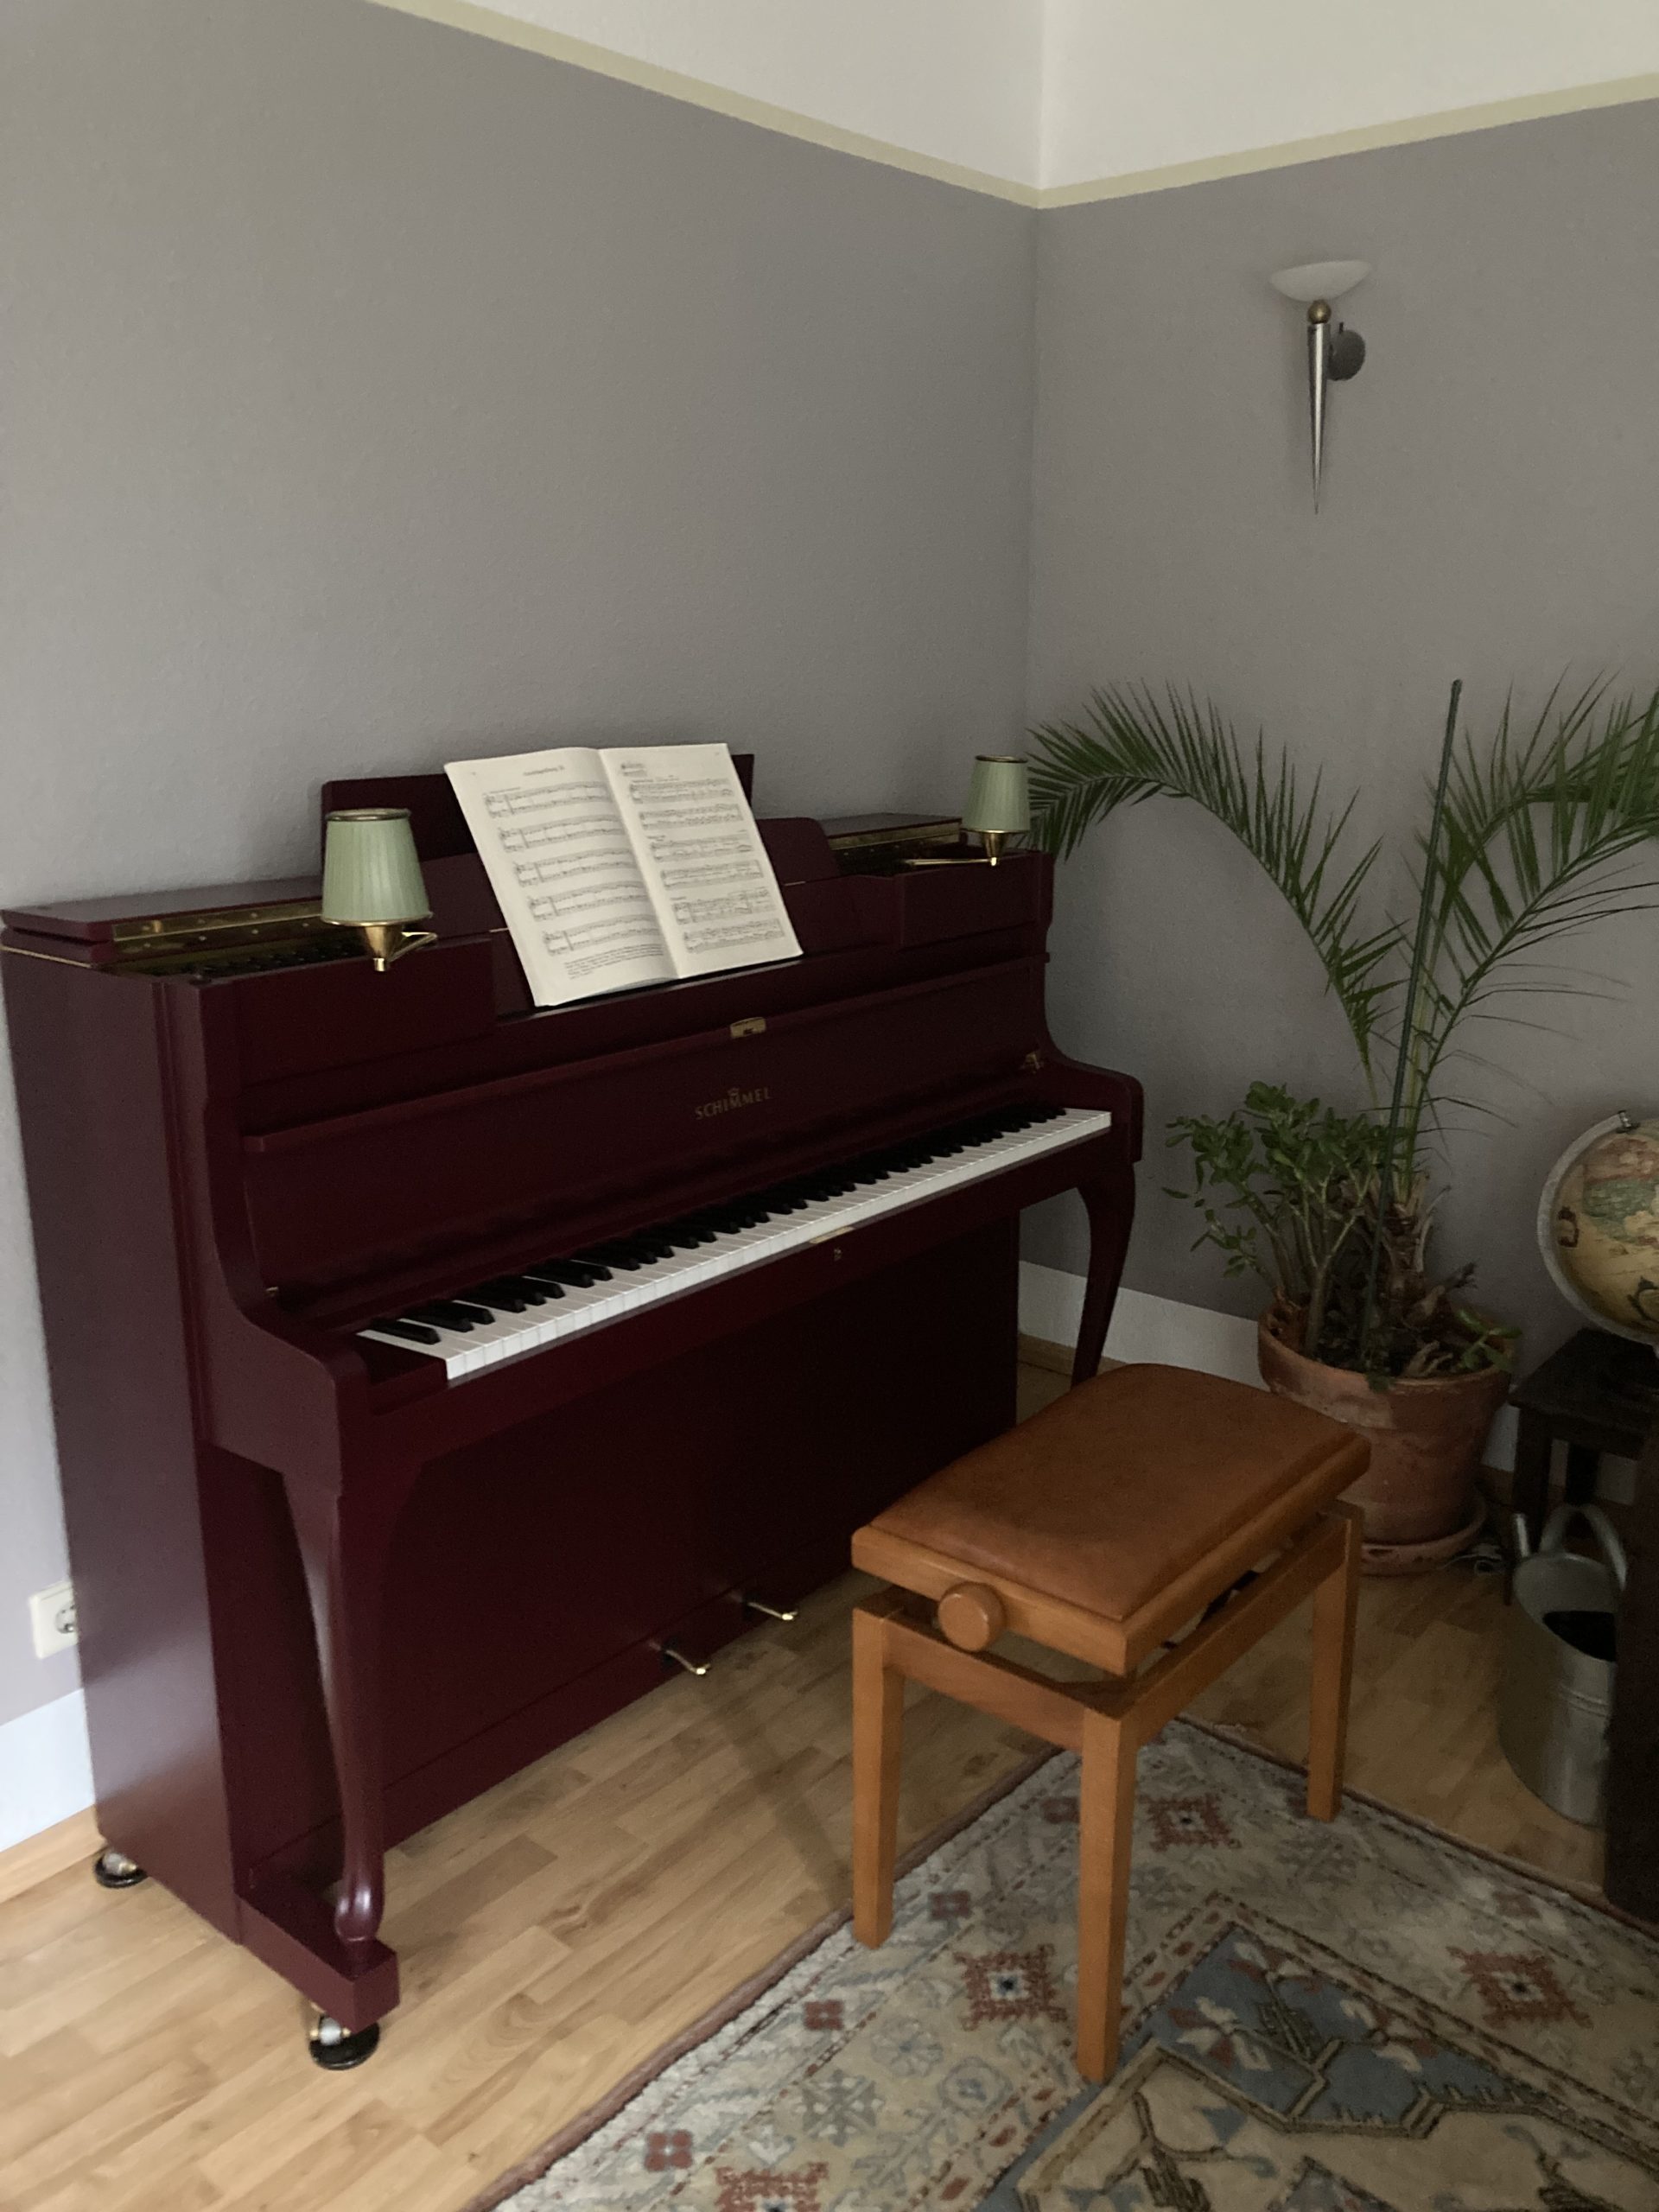 Klavier Schimmel 108 Chippendale - DEGUS PIANOS - Kunden Bewertung